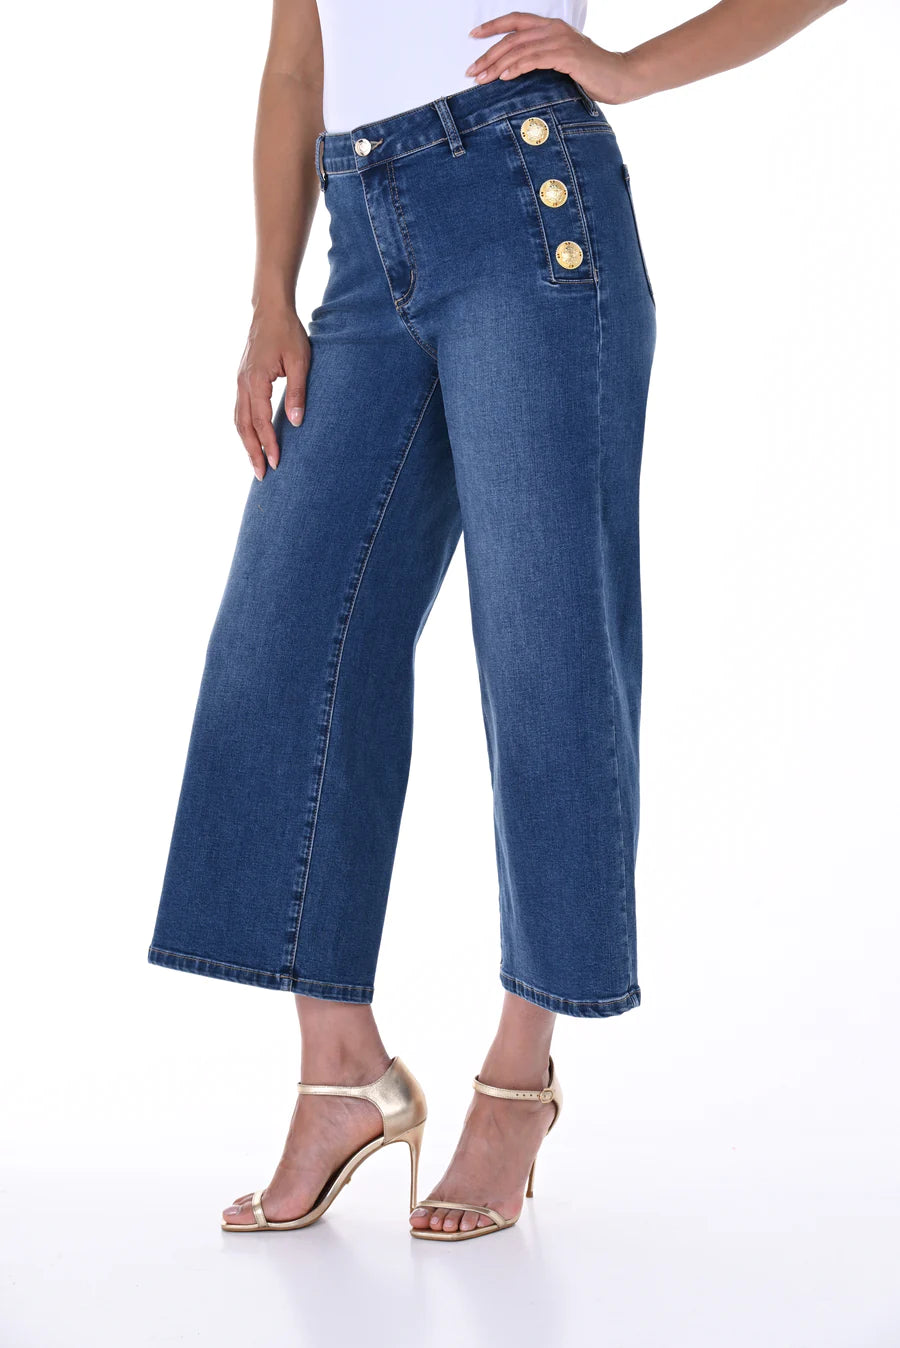 Frank Lyman 3/4 wide leg Denim Jeans